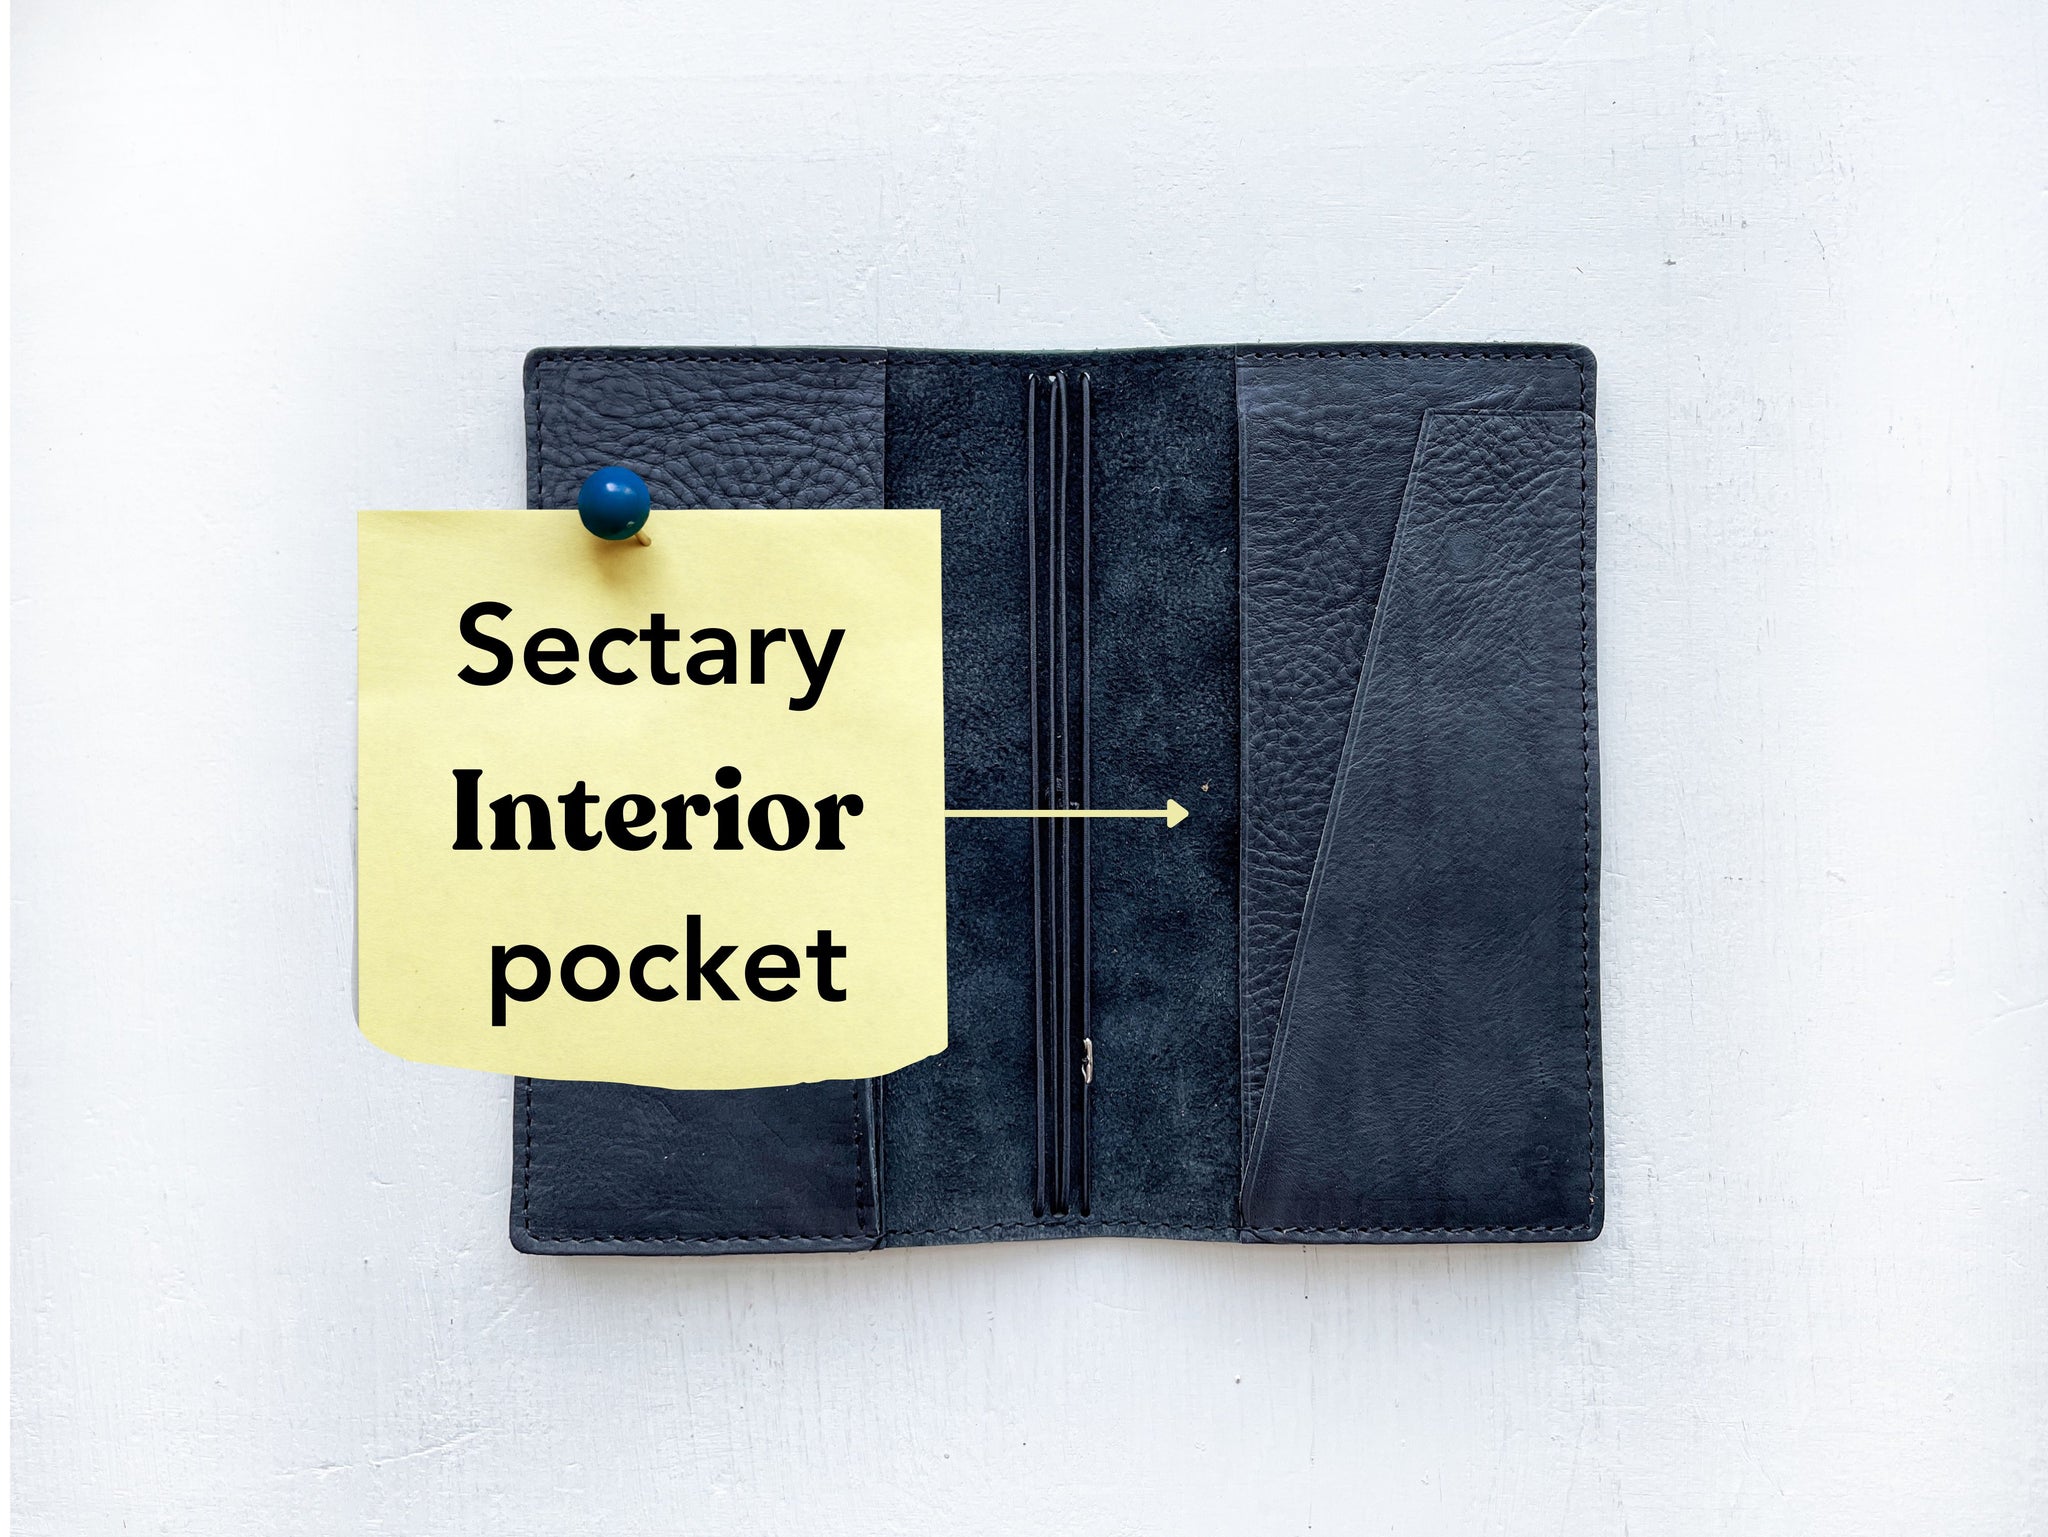 Add Sectary Interior Pocket